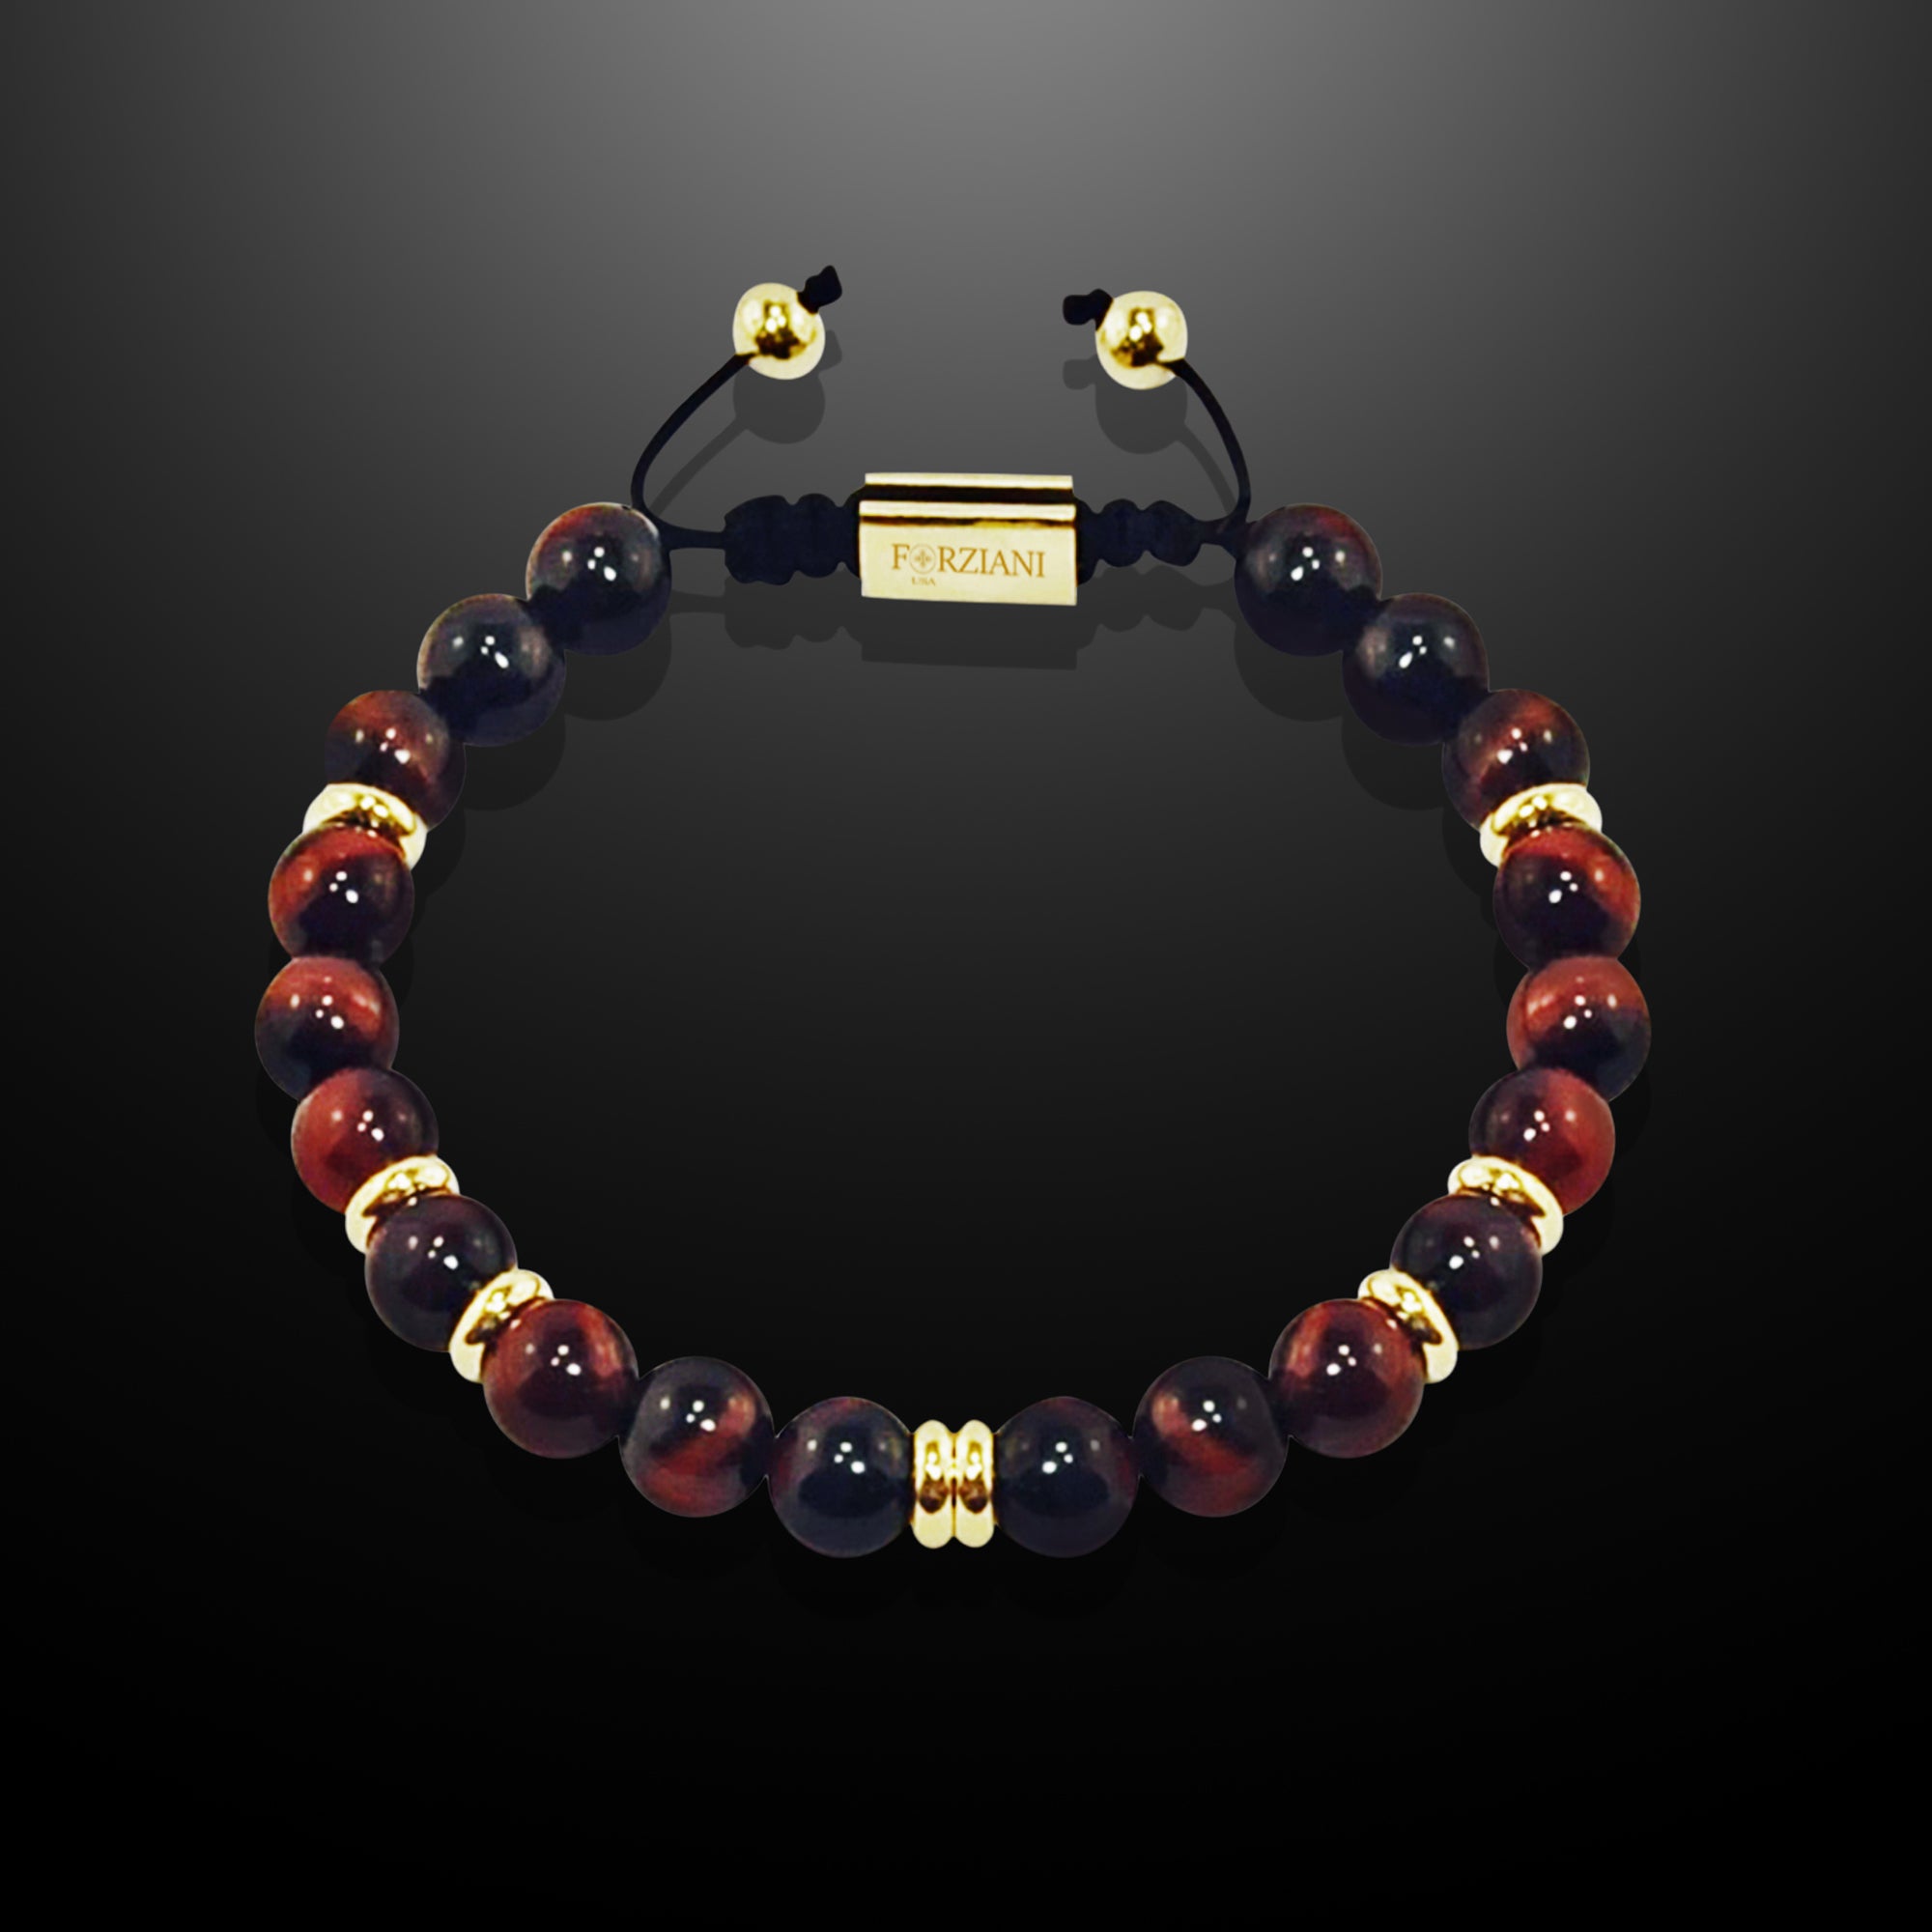 Buy Tiger Iron Tiger Eye Black Onyx Mixed Man's Bracelet 8mm Round Beads  Protection Bracelet Natural Gemstone Girt for Him Online in India - Etsy